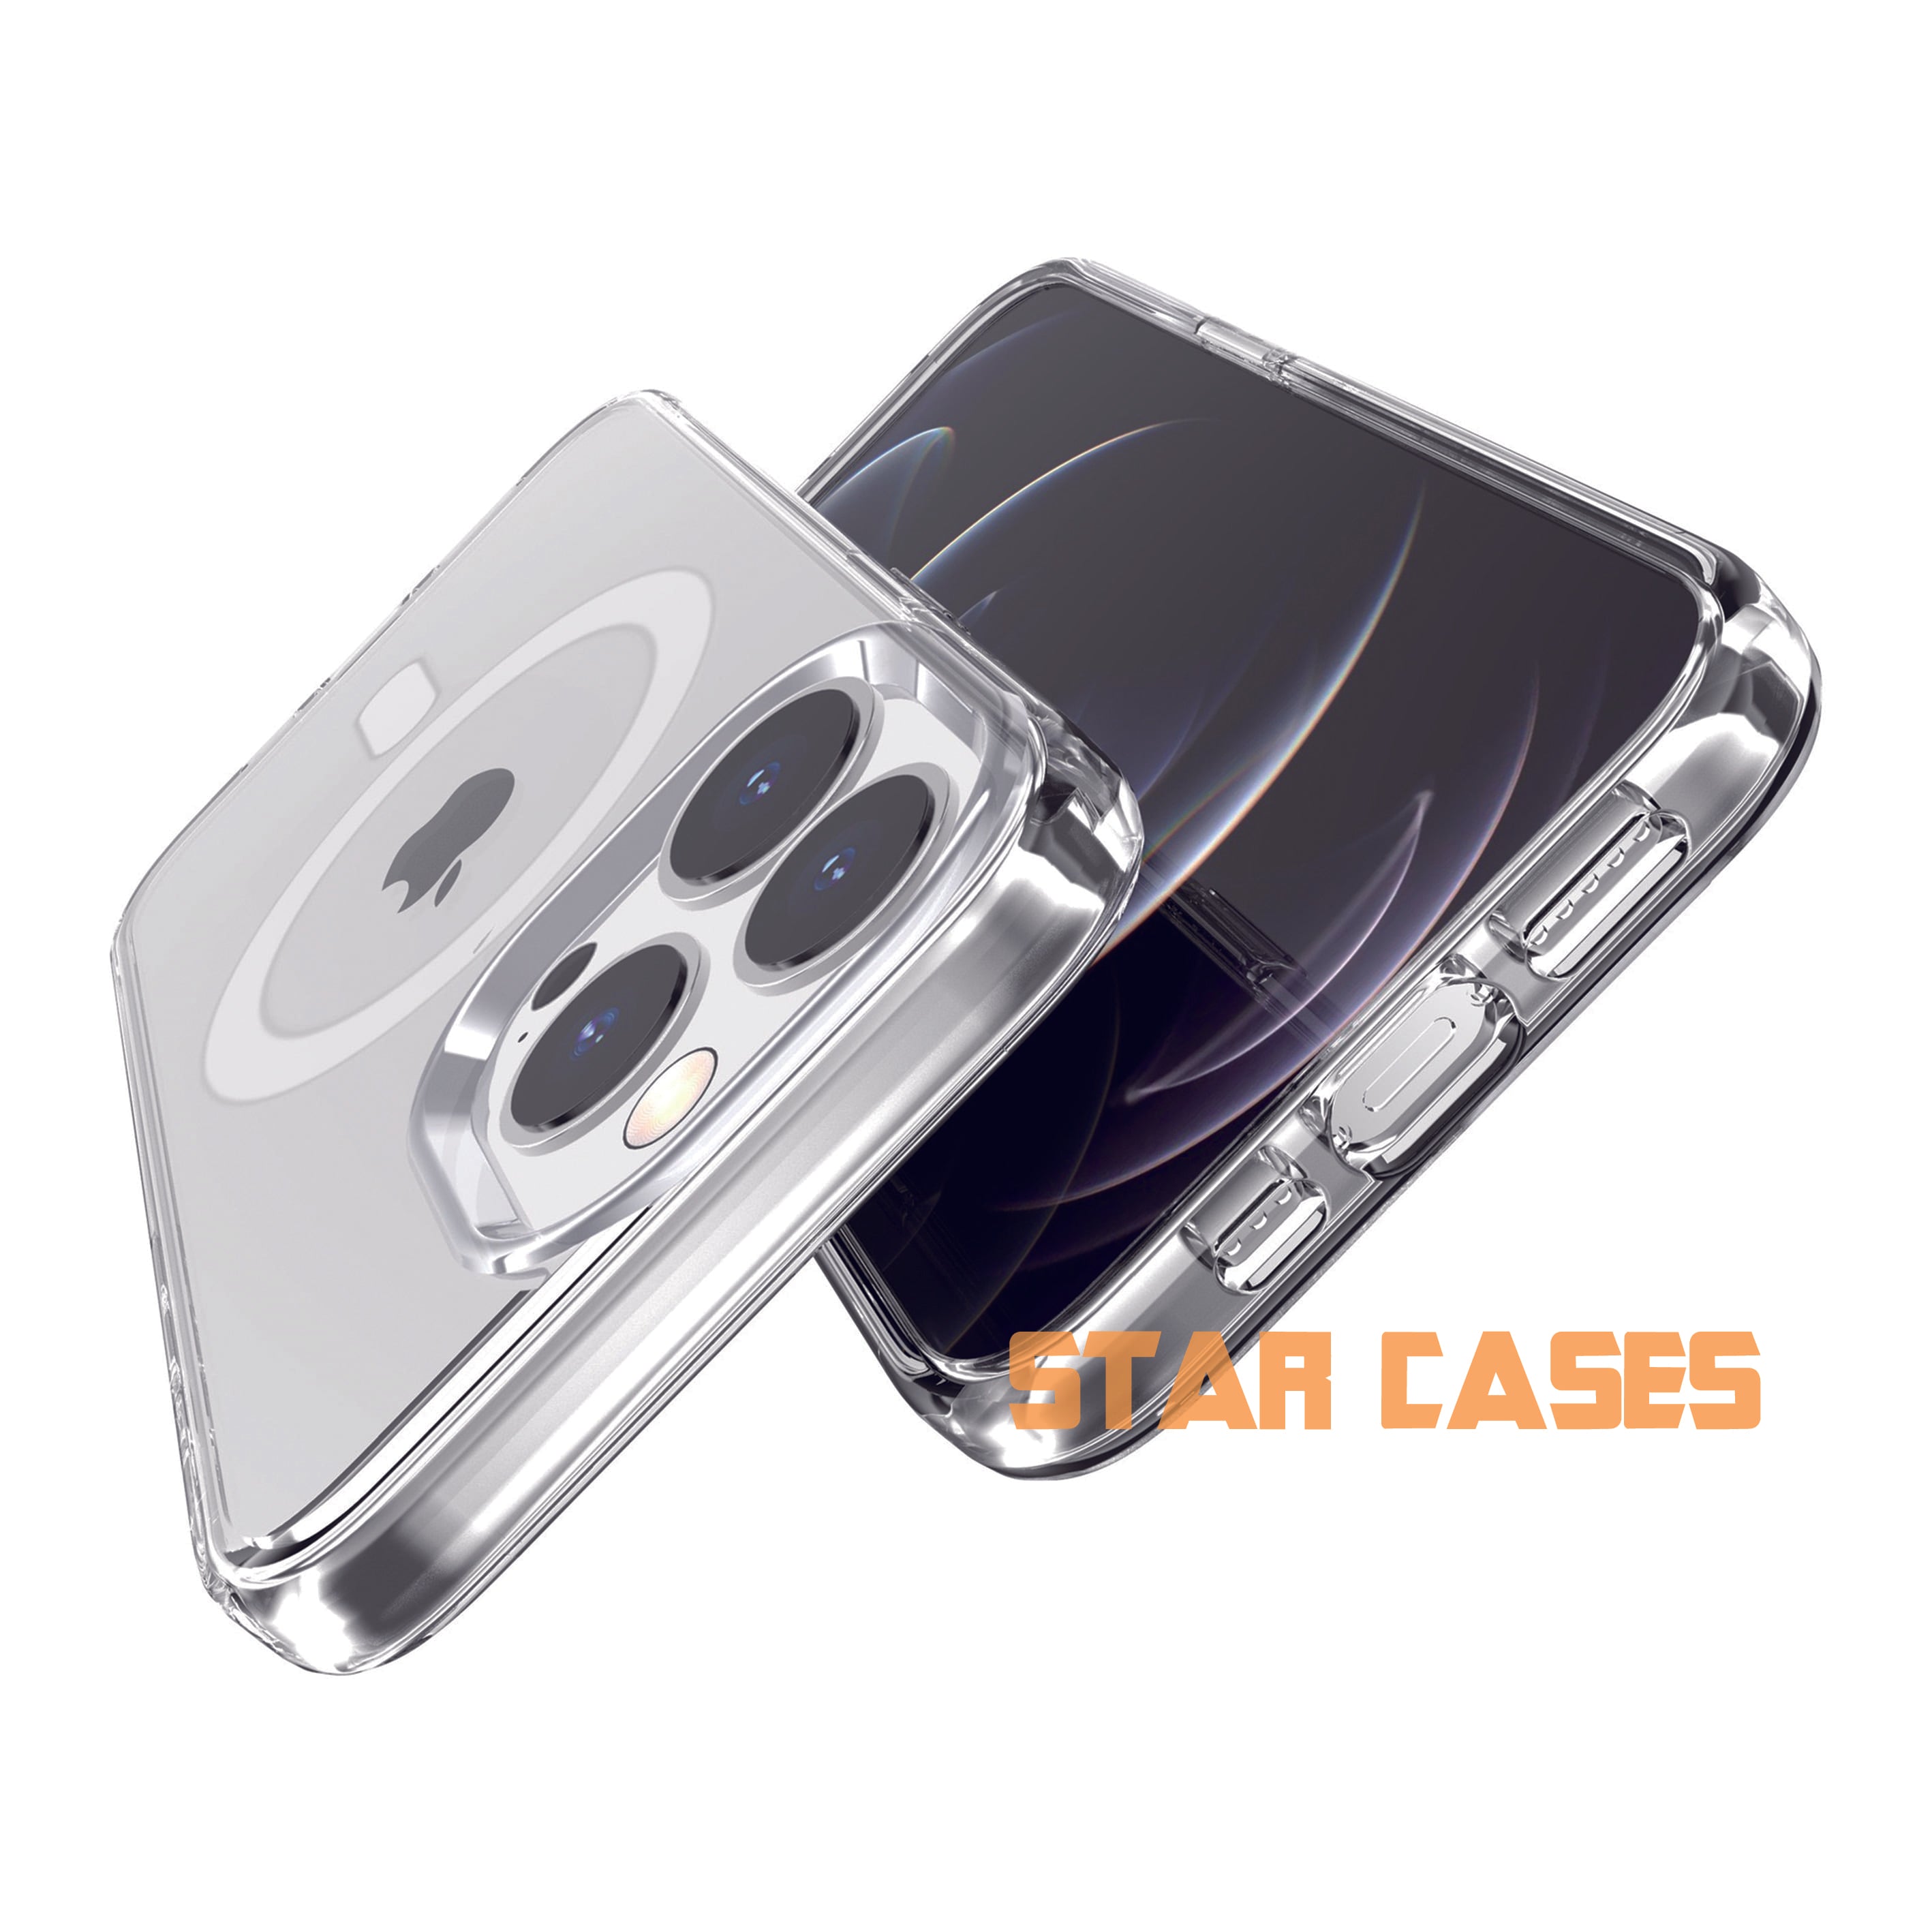 iPhone 11 Terminator Magsafe Hard Clear Case